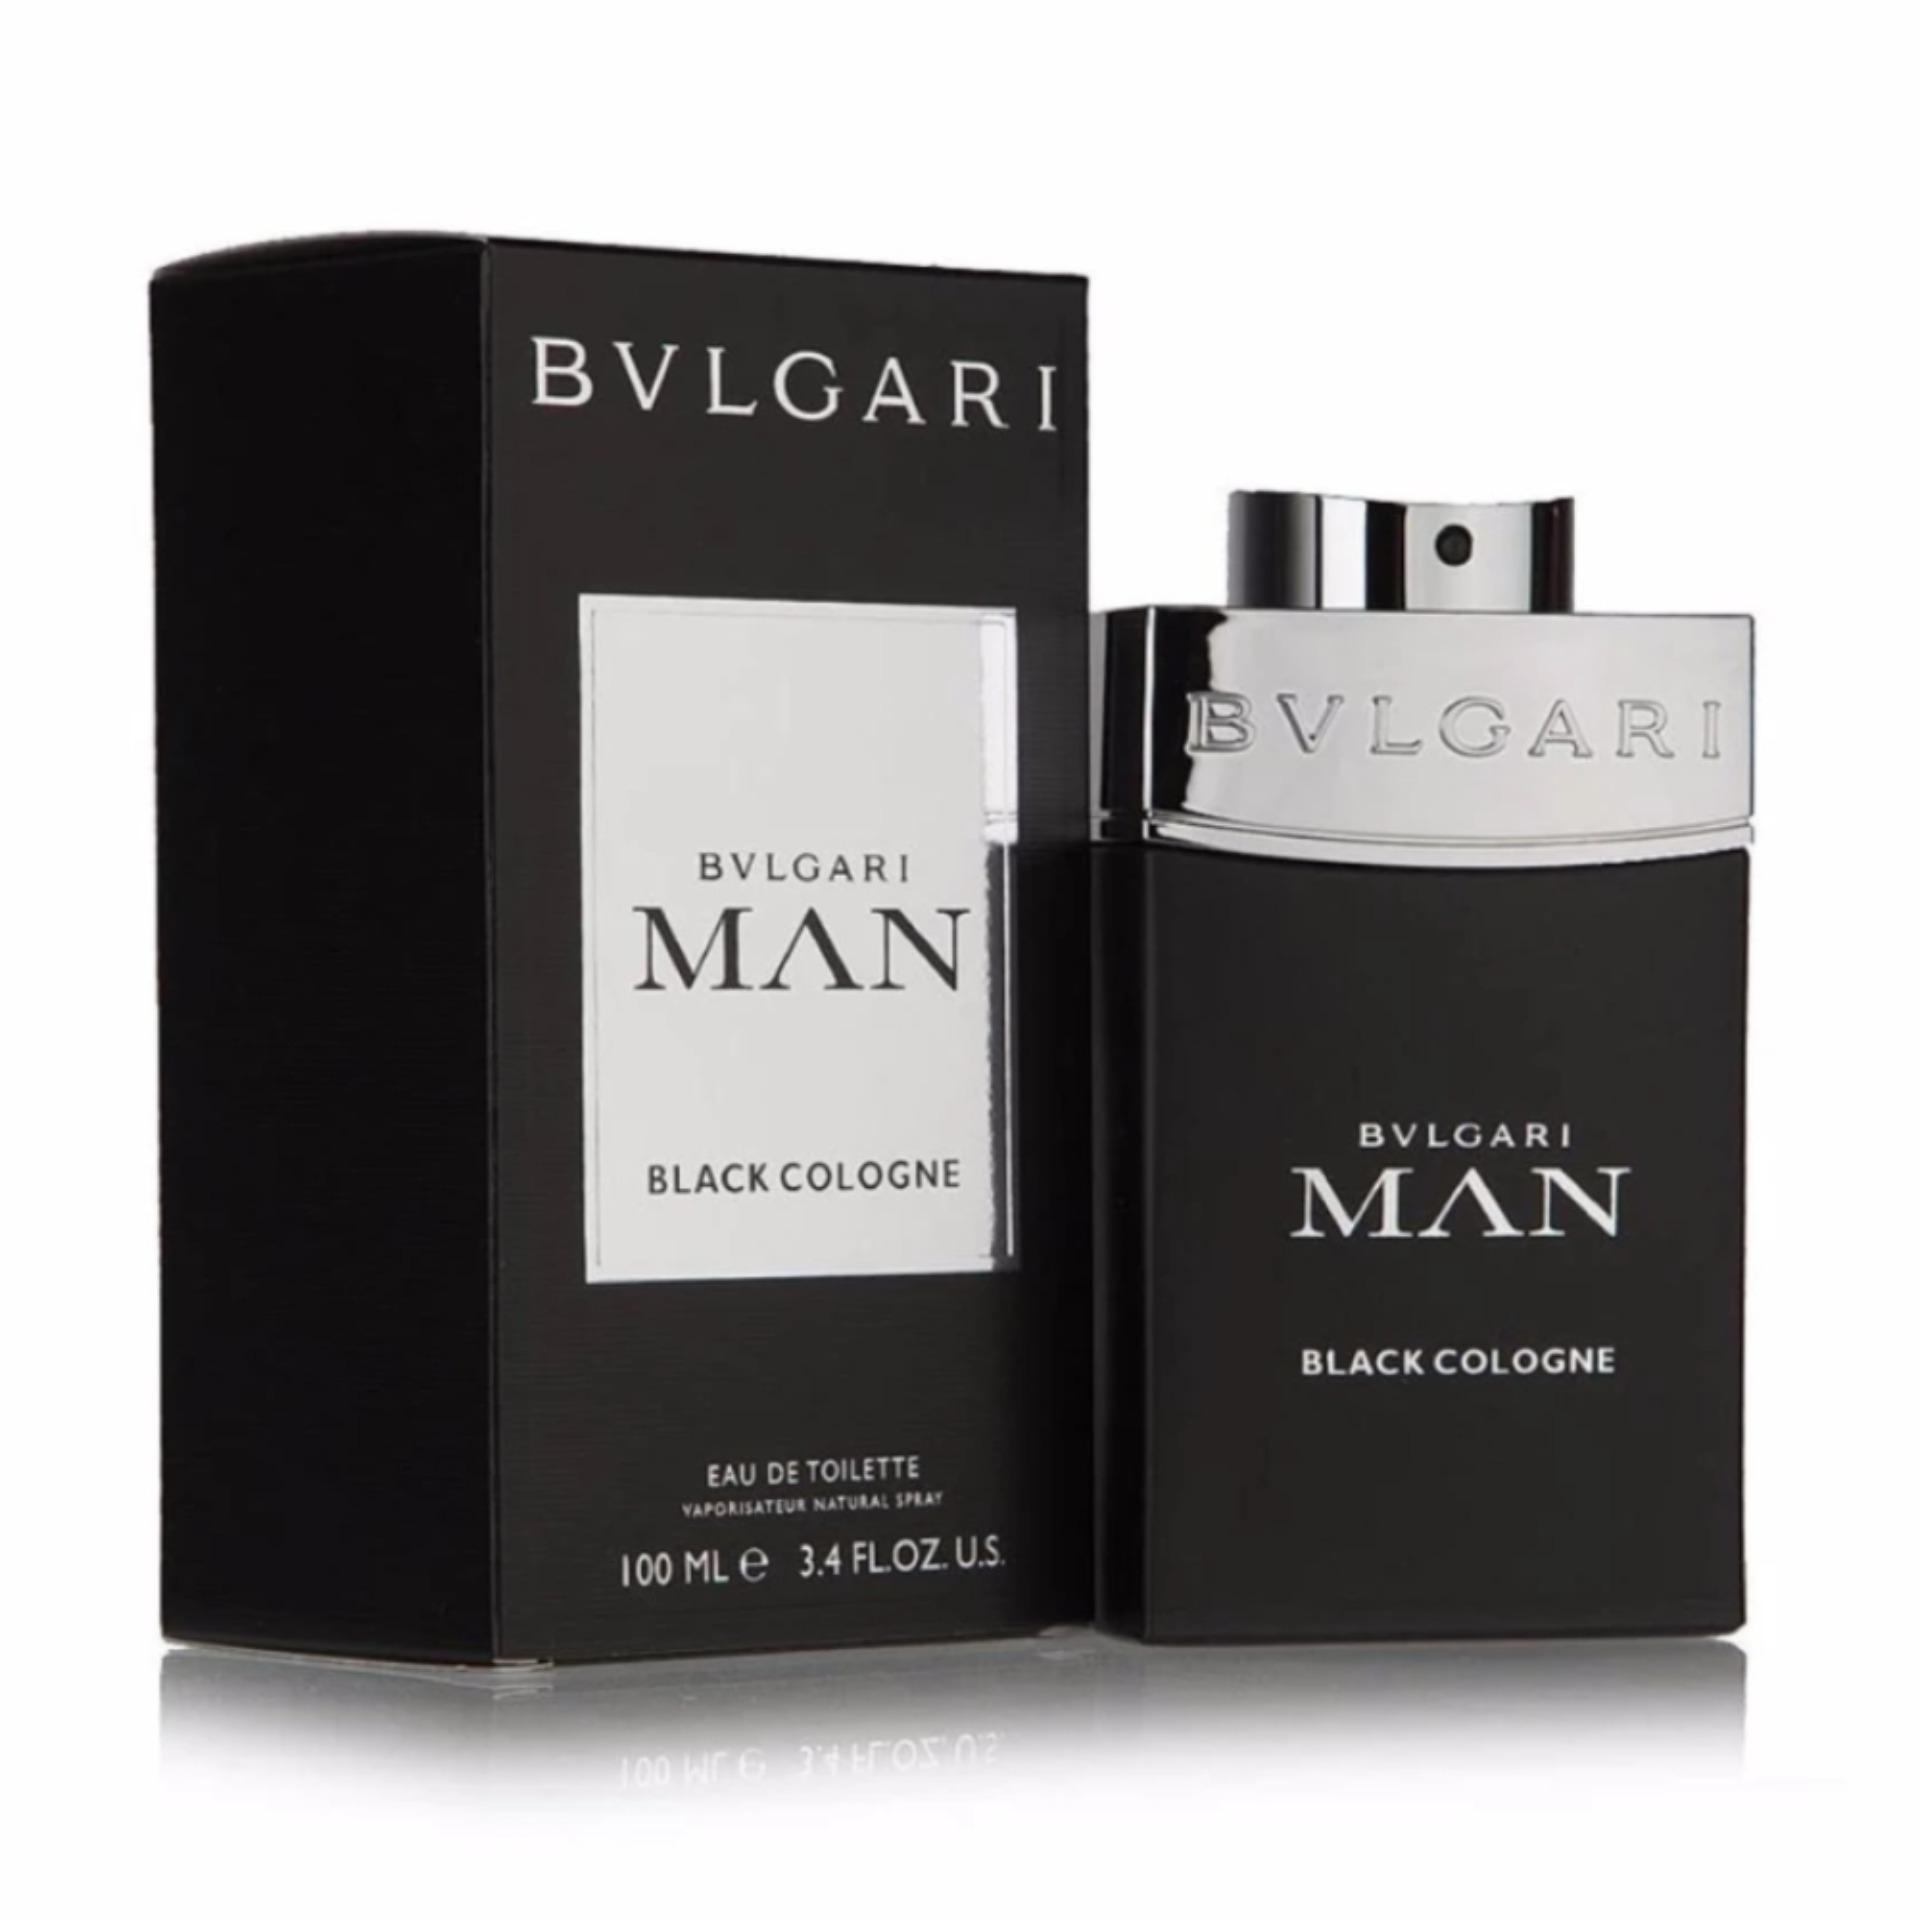 bvlgari men's cologne review